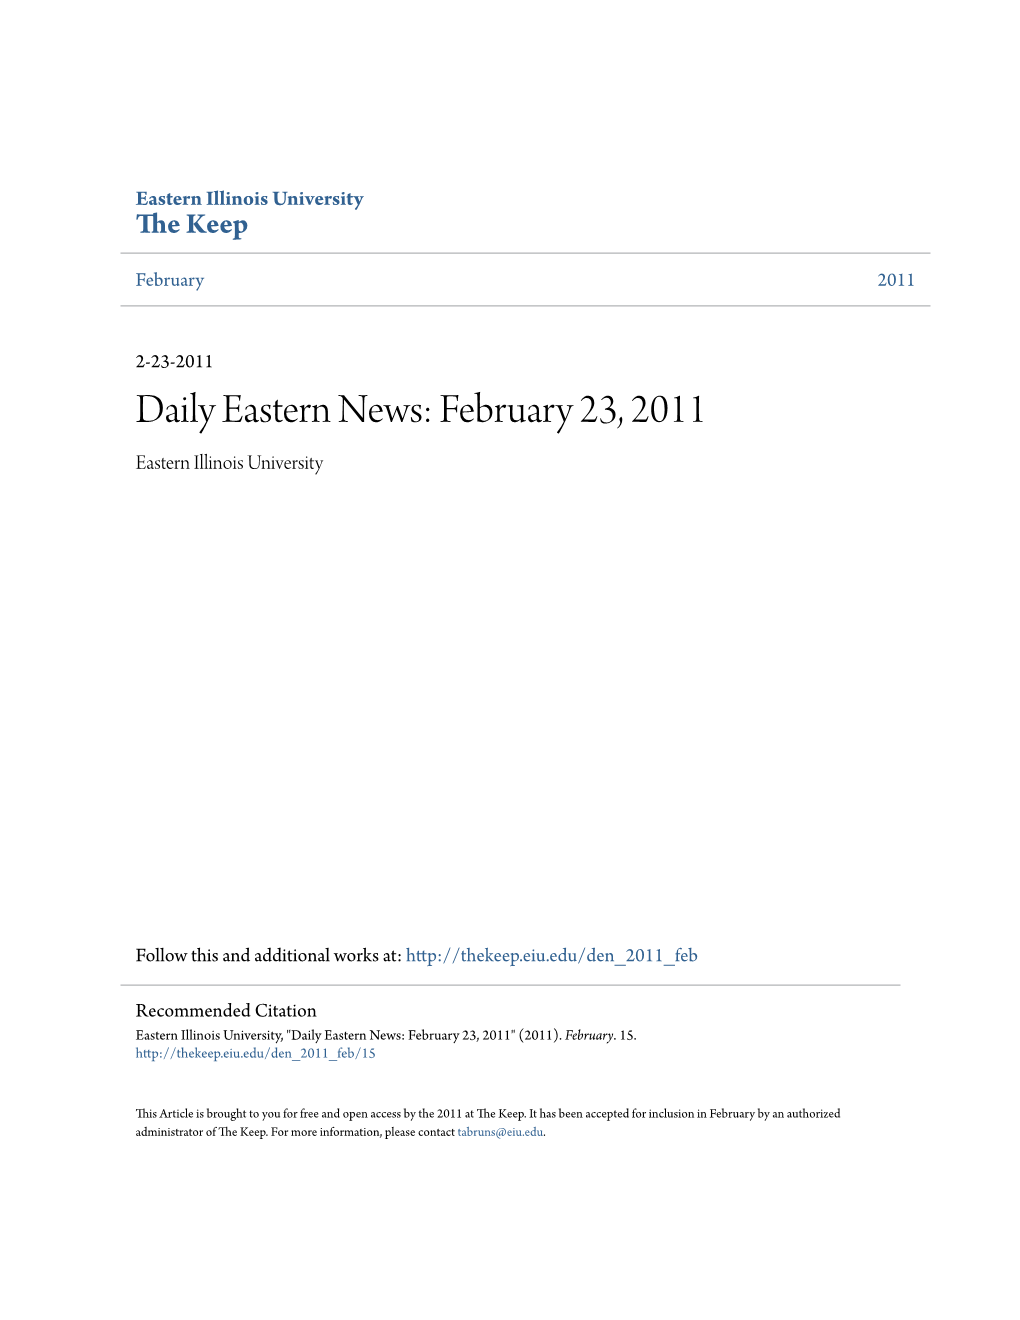 Daily Eastern News: February 23, 2011 Eastern Illinois University